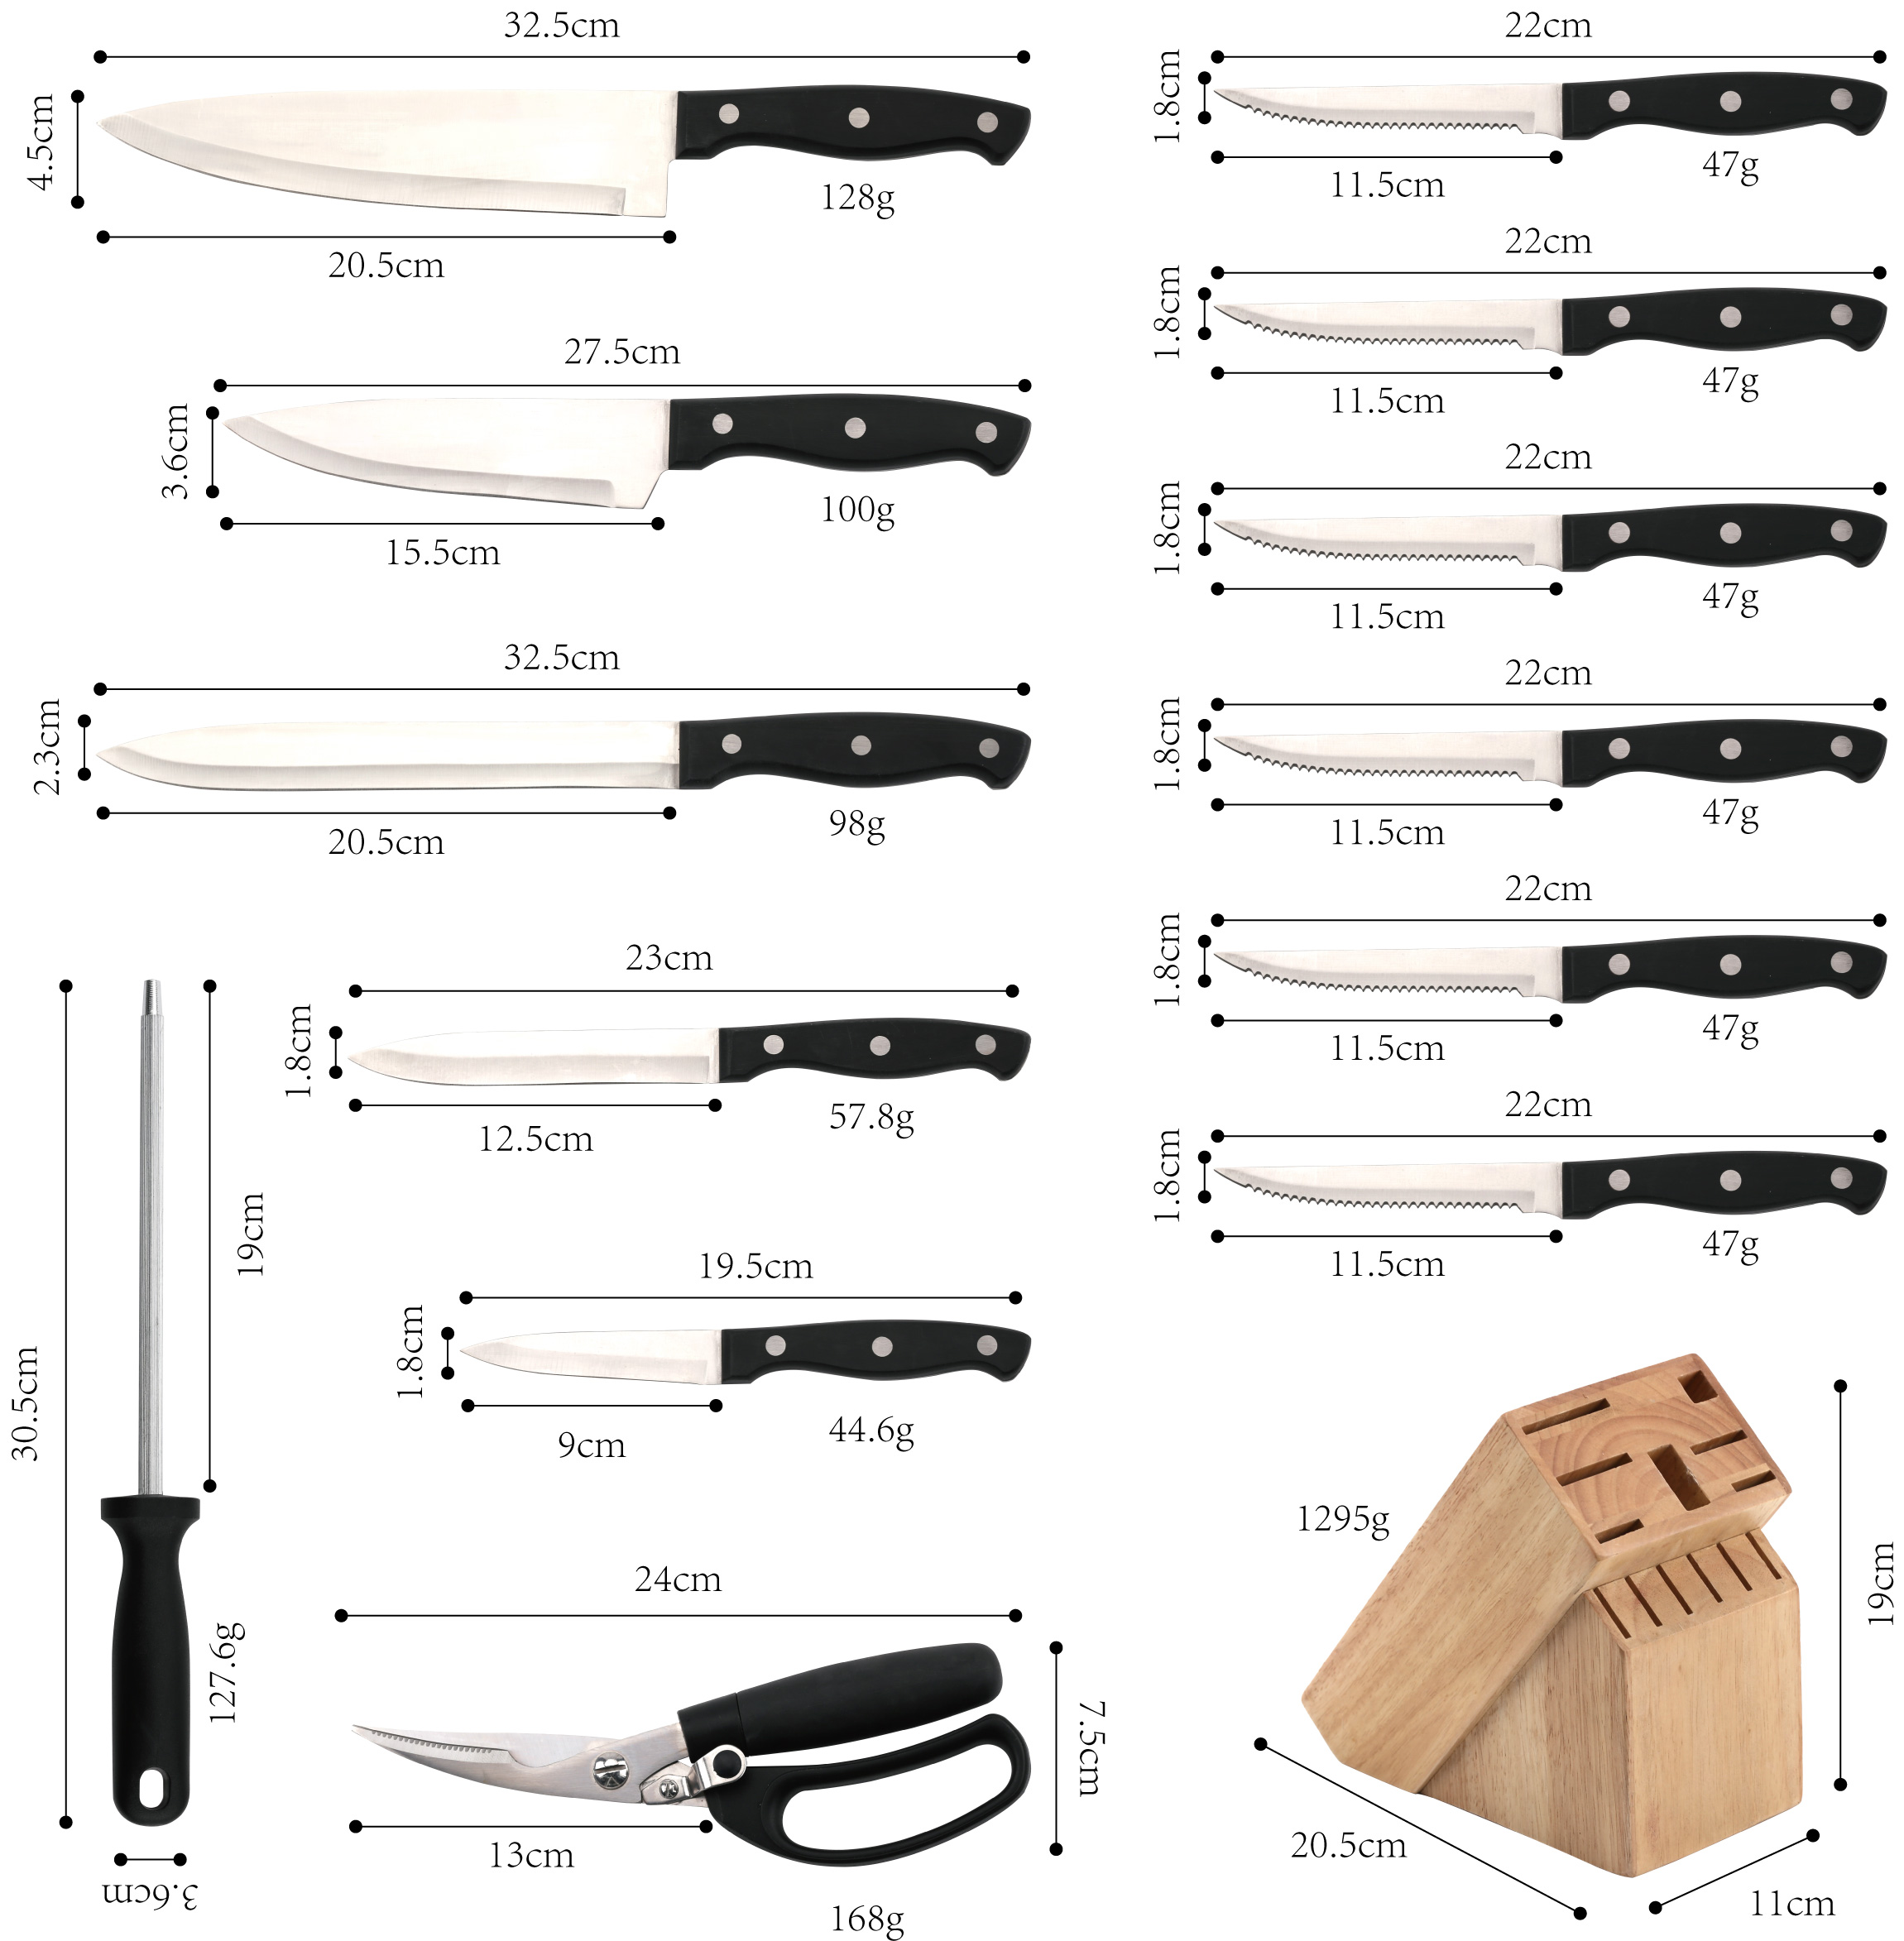 J104-14-Piece پريميئم باورچی چاقو بلاڪ سيٽ، هاء-ڪاربن اسٽينلیس سٹیل-ZX | باورچی خانه جو چاقو،بچي جو اوزار،سلڪون ڪيڪ مولڊ،ڪٽنگ بورڊ،بيڪنگ ٽول سيٽ،شيف چاقو،اسٽيڪ چاقو،سلائيسر چاقو،يوٽيلٽي چاقو،پيرنگ چاقو،چاقو بلاڪ،چاقو اسٽينڊ،سينٽوڪو چاقو،ٻار ٻارڻ چاقو،پلاسٽڪ جي نانڪ چاقو، رنگ برنگي چاقو، اسٽينلیس اسٽيل چاقو، ڪين اوپنر، بوتل کولڻ وارو، چانهه ڇڪڻ وارو، گرٽر، ايگ بيٽر، نائلون باورچی خانه جو اوزار، سلڪون باورچی خانه جو اوزار، ڪوڪي ڪٽر، پچائڻ وارو چاقو سيٽ، چاقو تيز ڪندڙ، پيلر، ڪيڪ چاقو، چاقو چاقو، سليڪون اسپيٽولر، سلڪون چمچو، کاڌي جي ٽونگ، جعلسازي چاقو، باورچی خانه جي اسڪيسر، ڪيڪ بيڪنگ چاقو، ٻارن جي پچائڻ جا چاقو، نقاشي چاقو